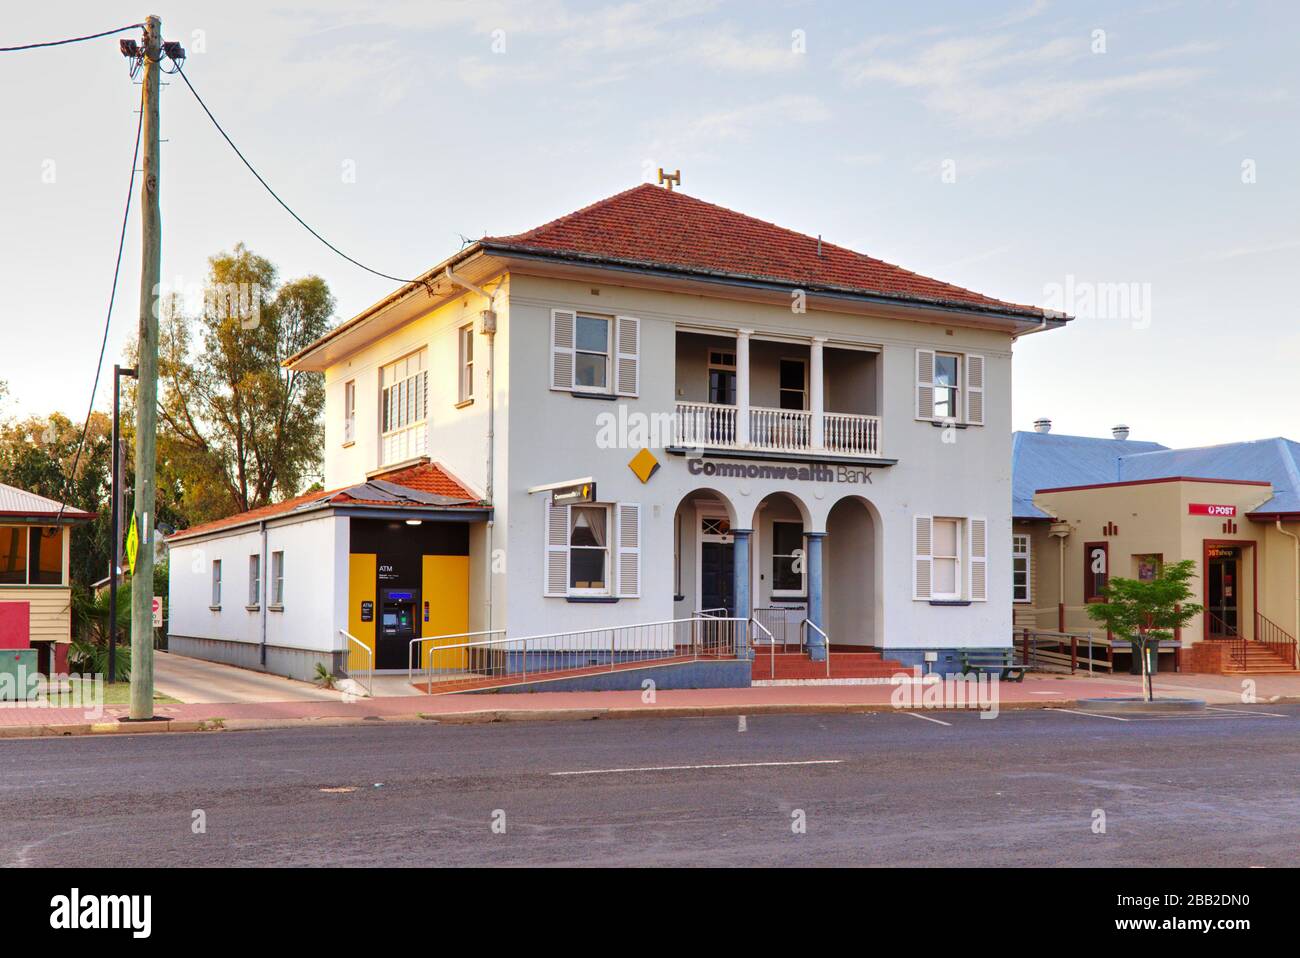 Commonwealth Bank of Australia building in Charleville Queensland Australia Stock Photo